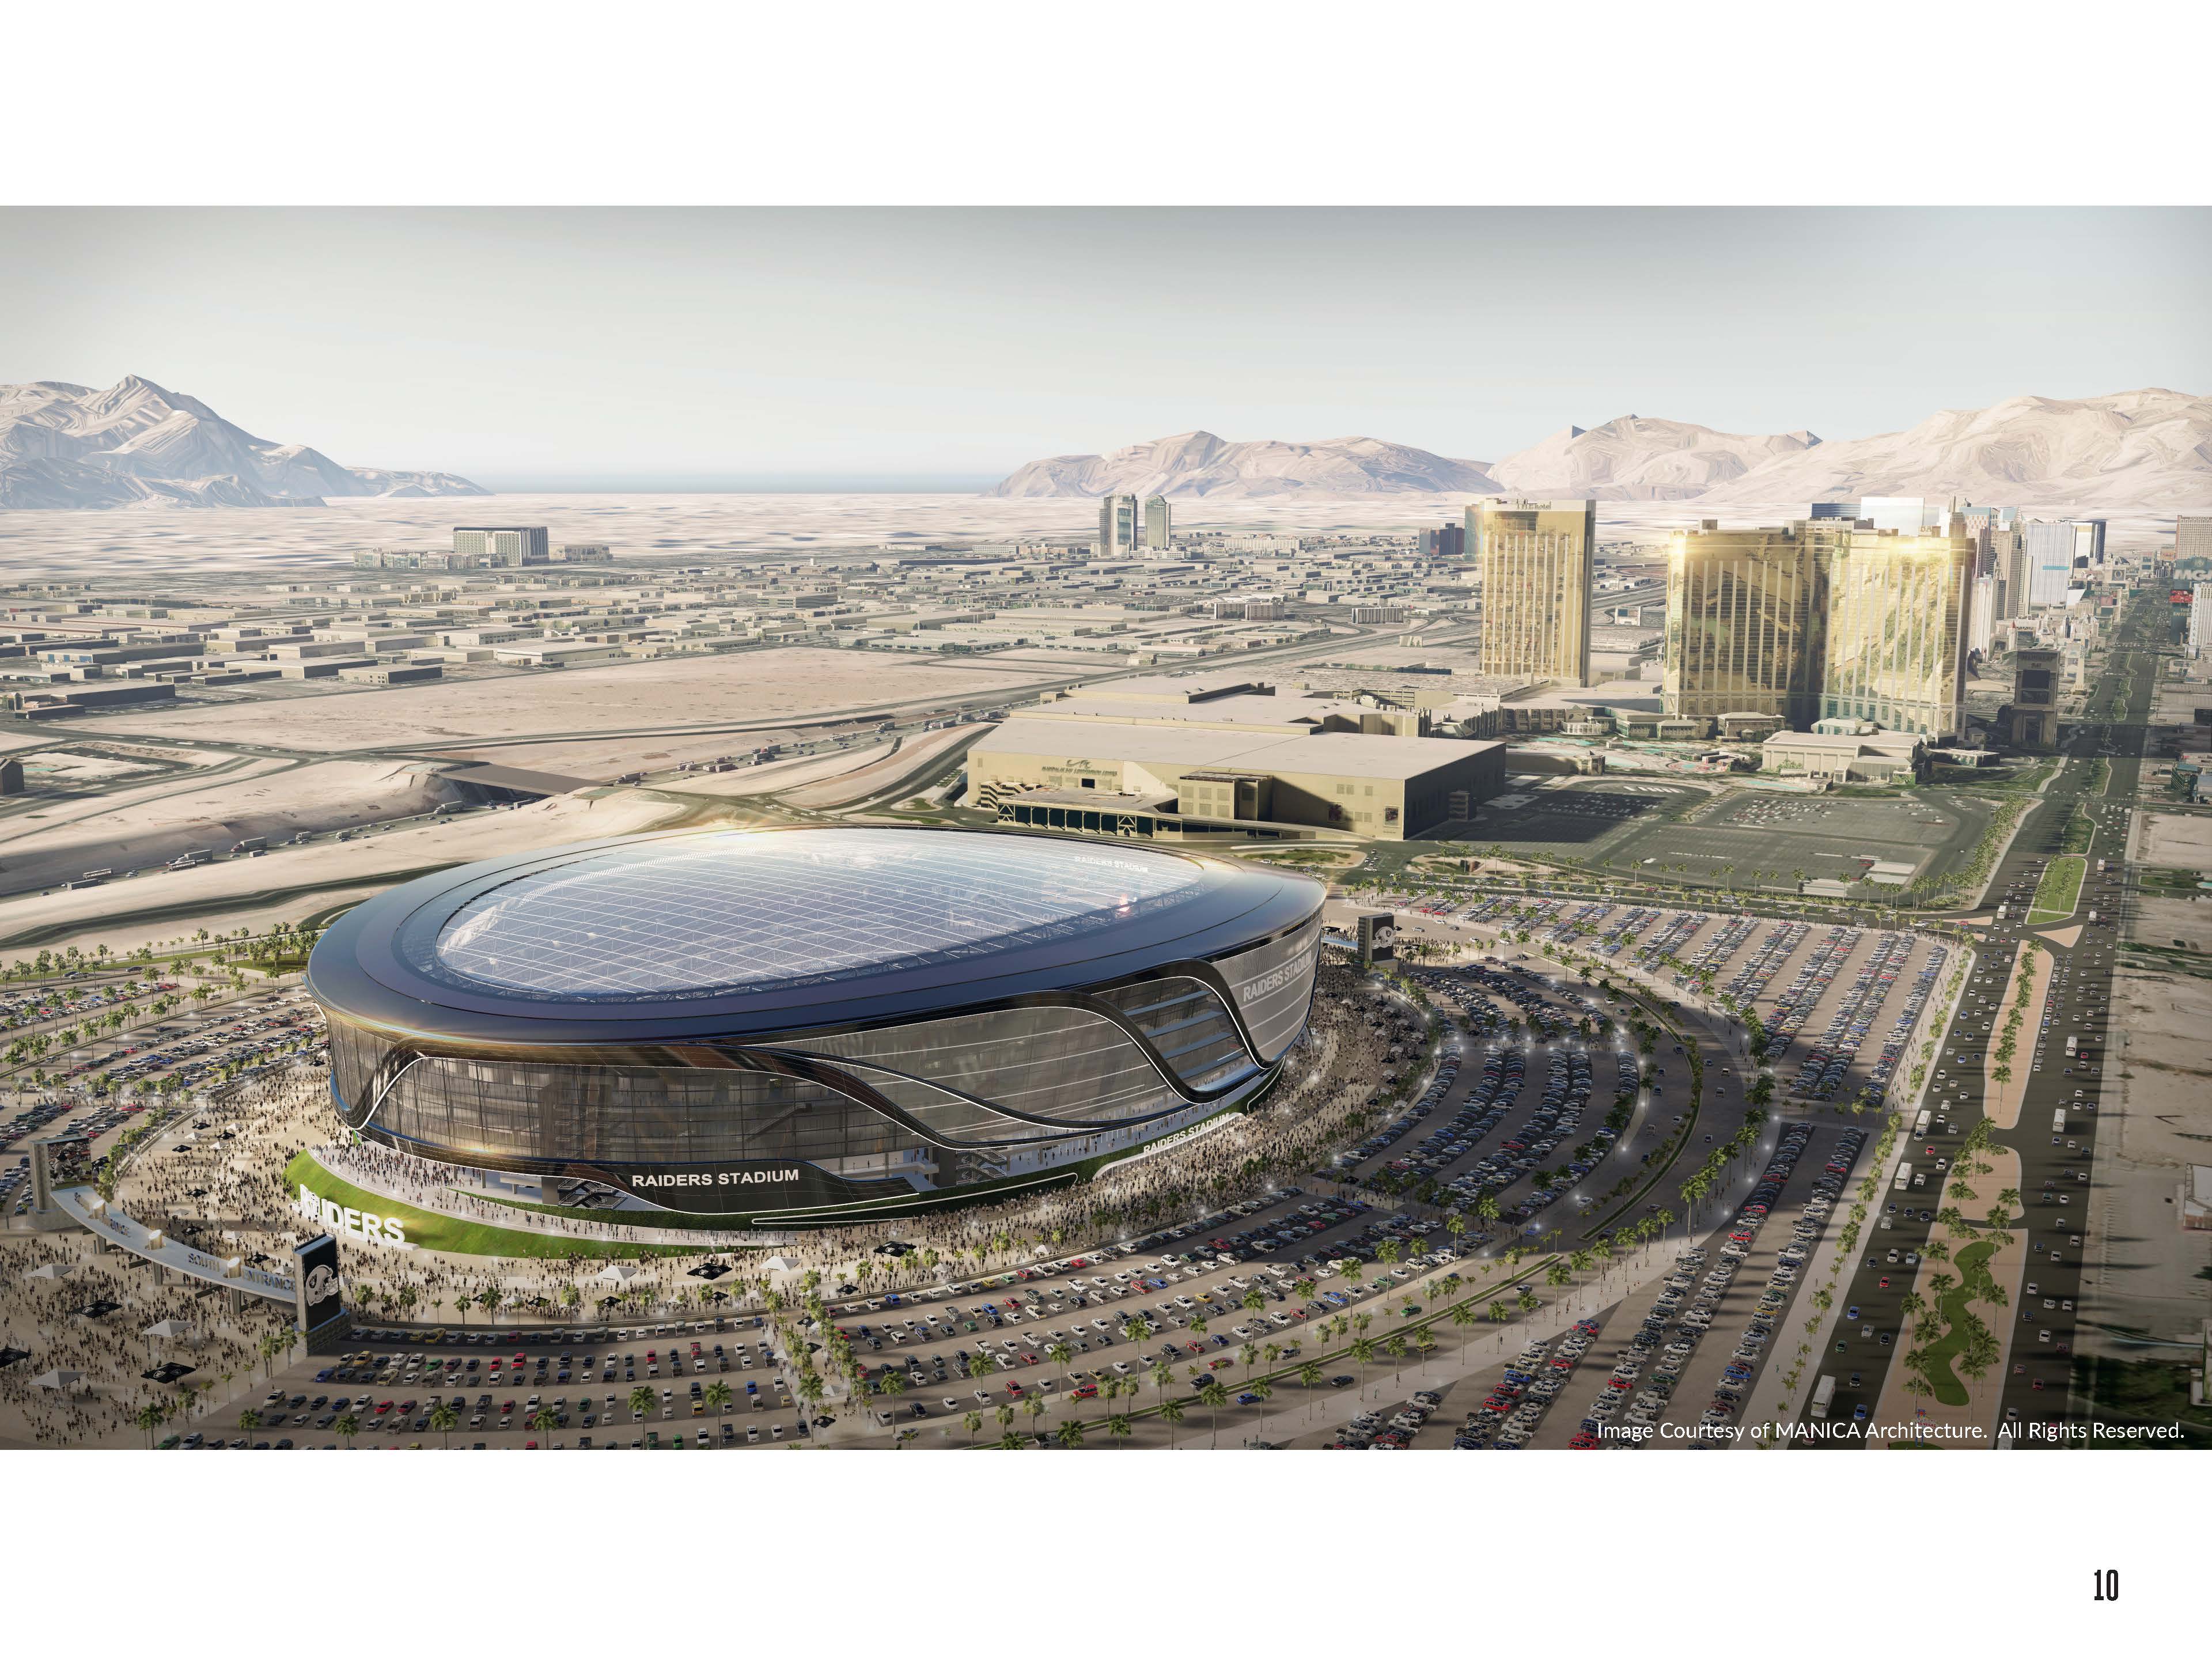 Oakland Raiders pitch a $1.9 billion Las Vegas stadium - Archpaper.com3840 x 2880